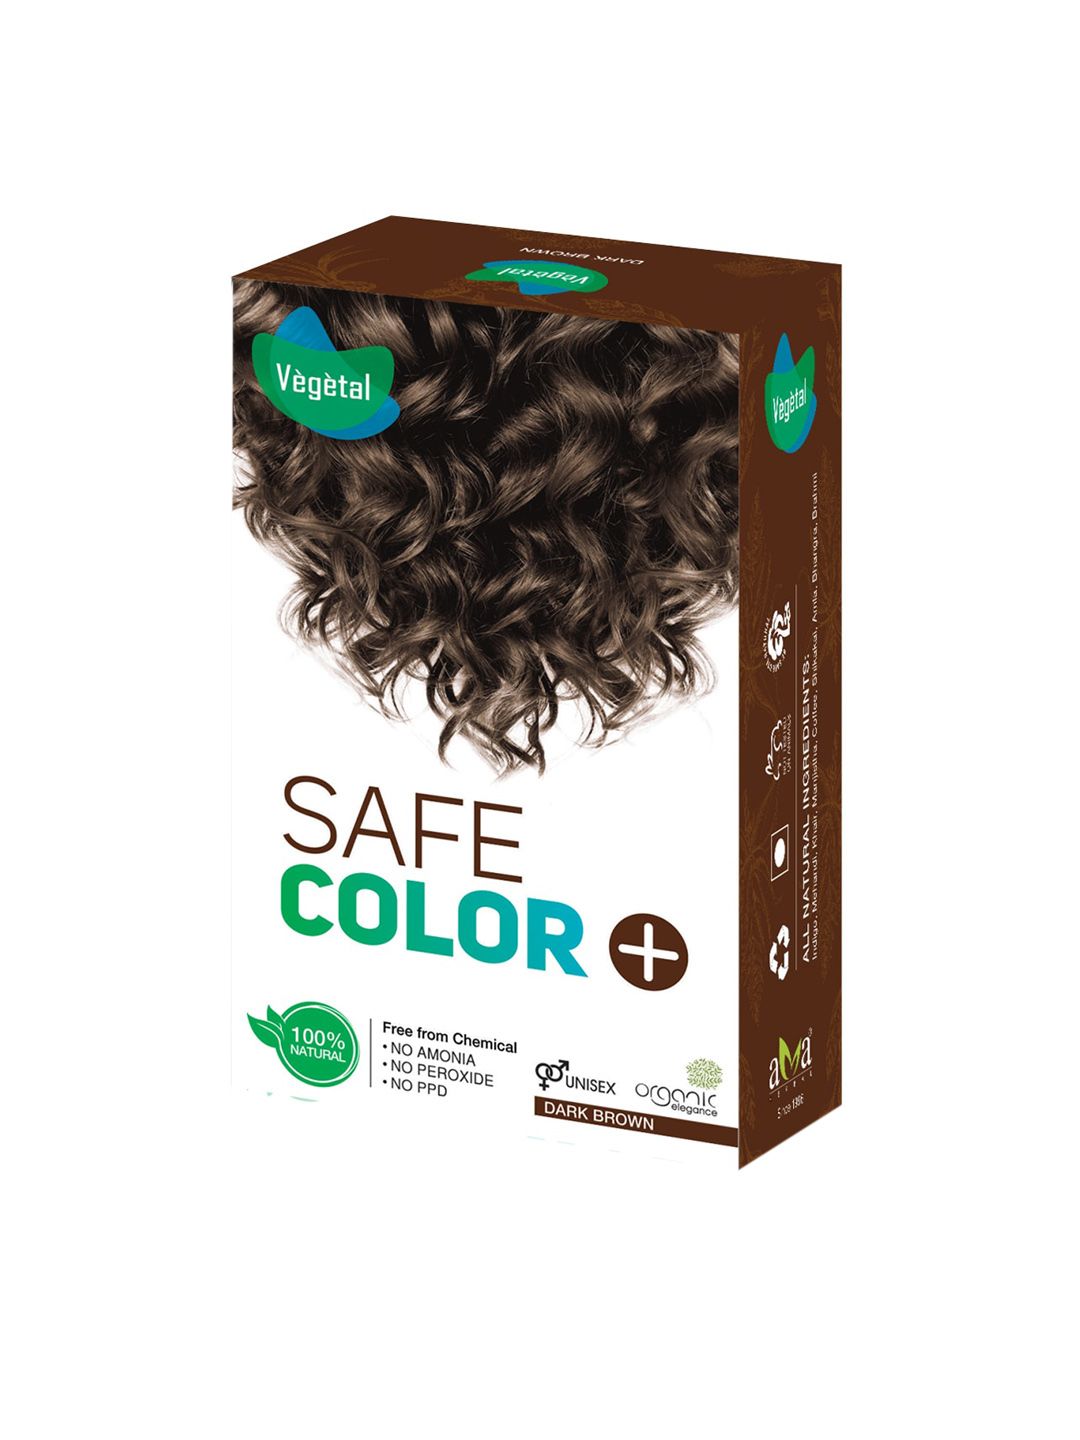 Vegetal Unisex Brown Hair Colour Price in India